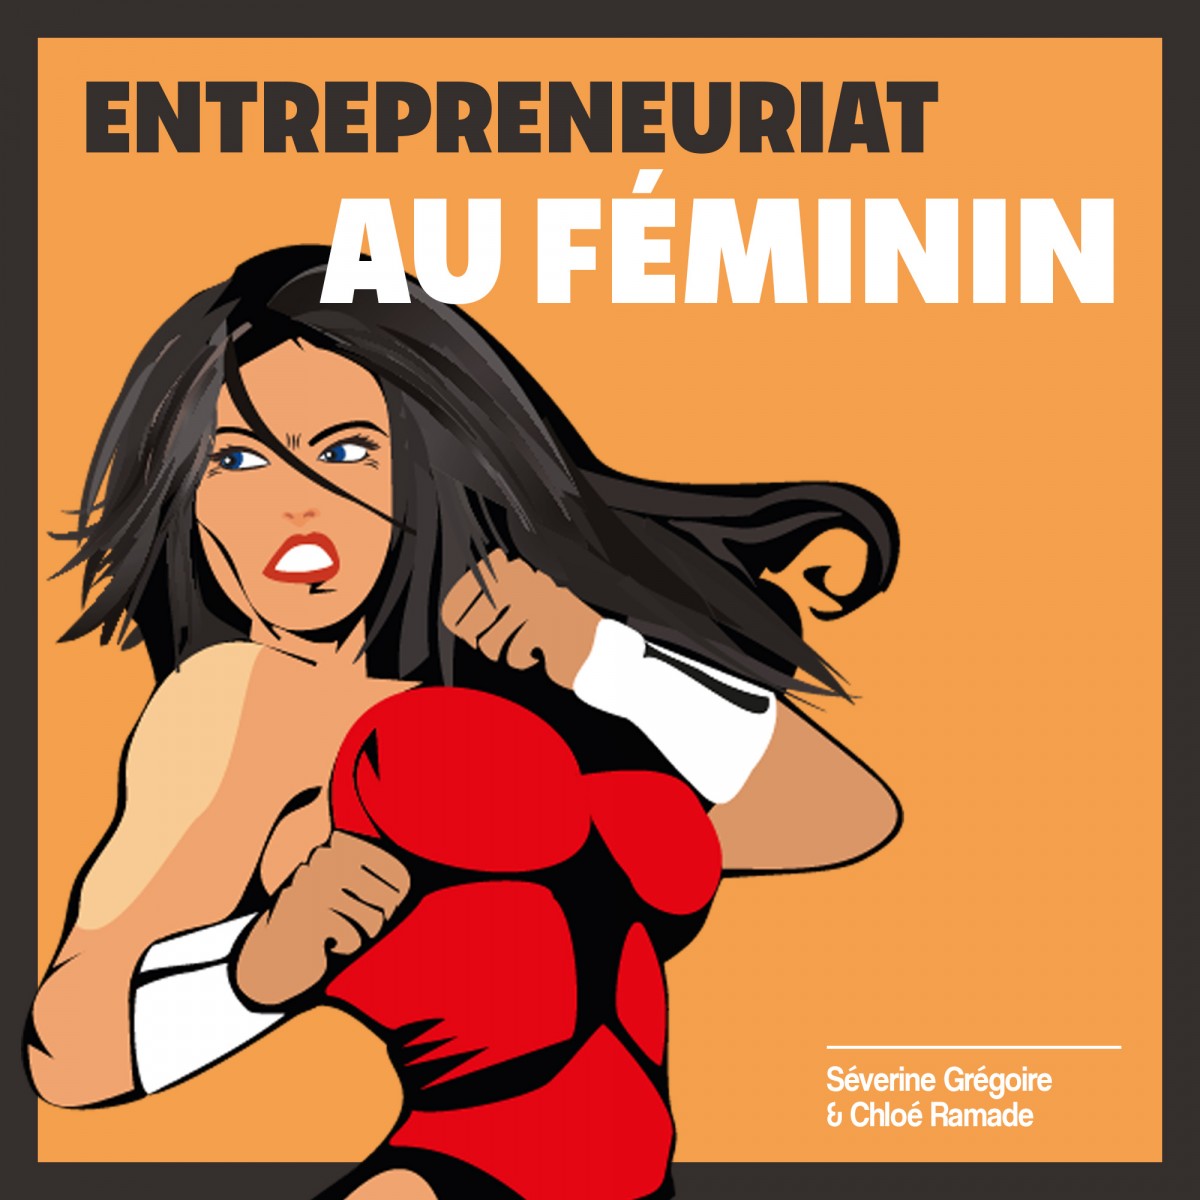 Entrepreneuriat au féminin : Severine Gregoire et Chloe Ramade